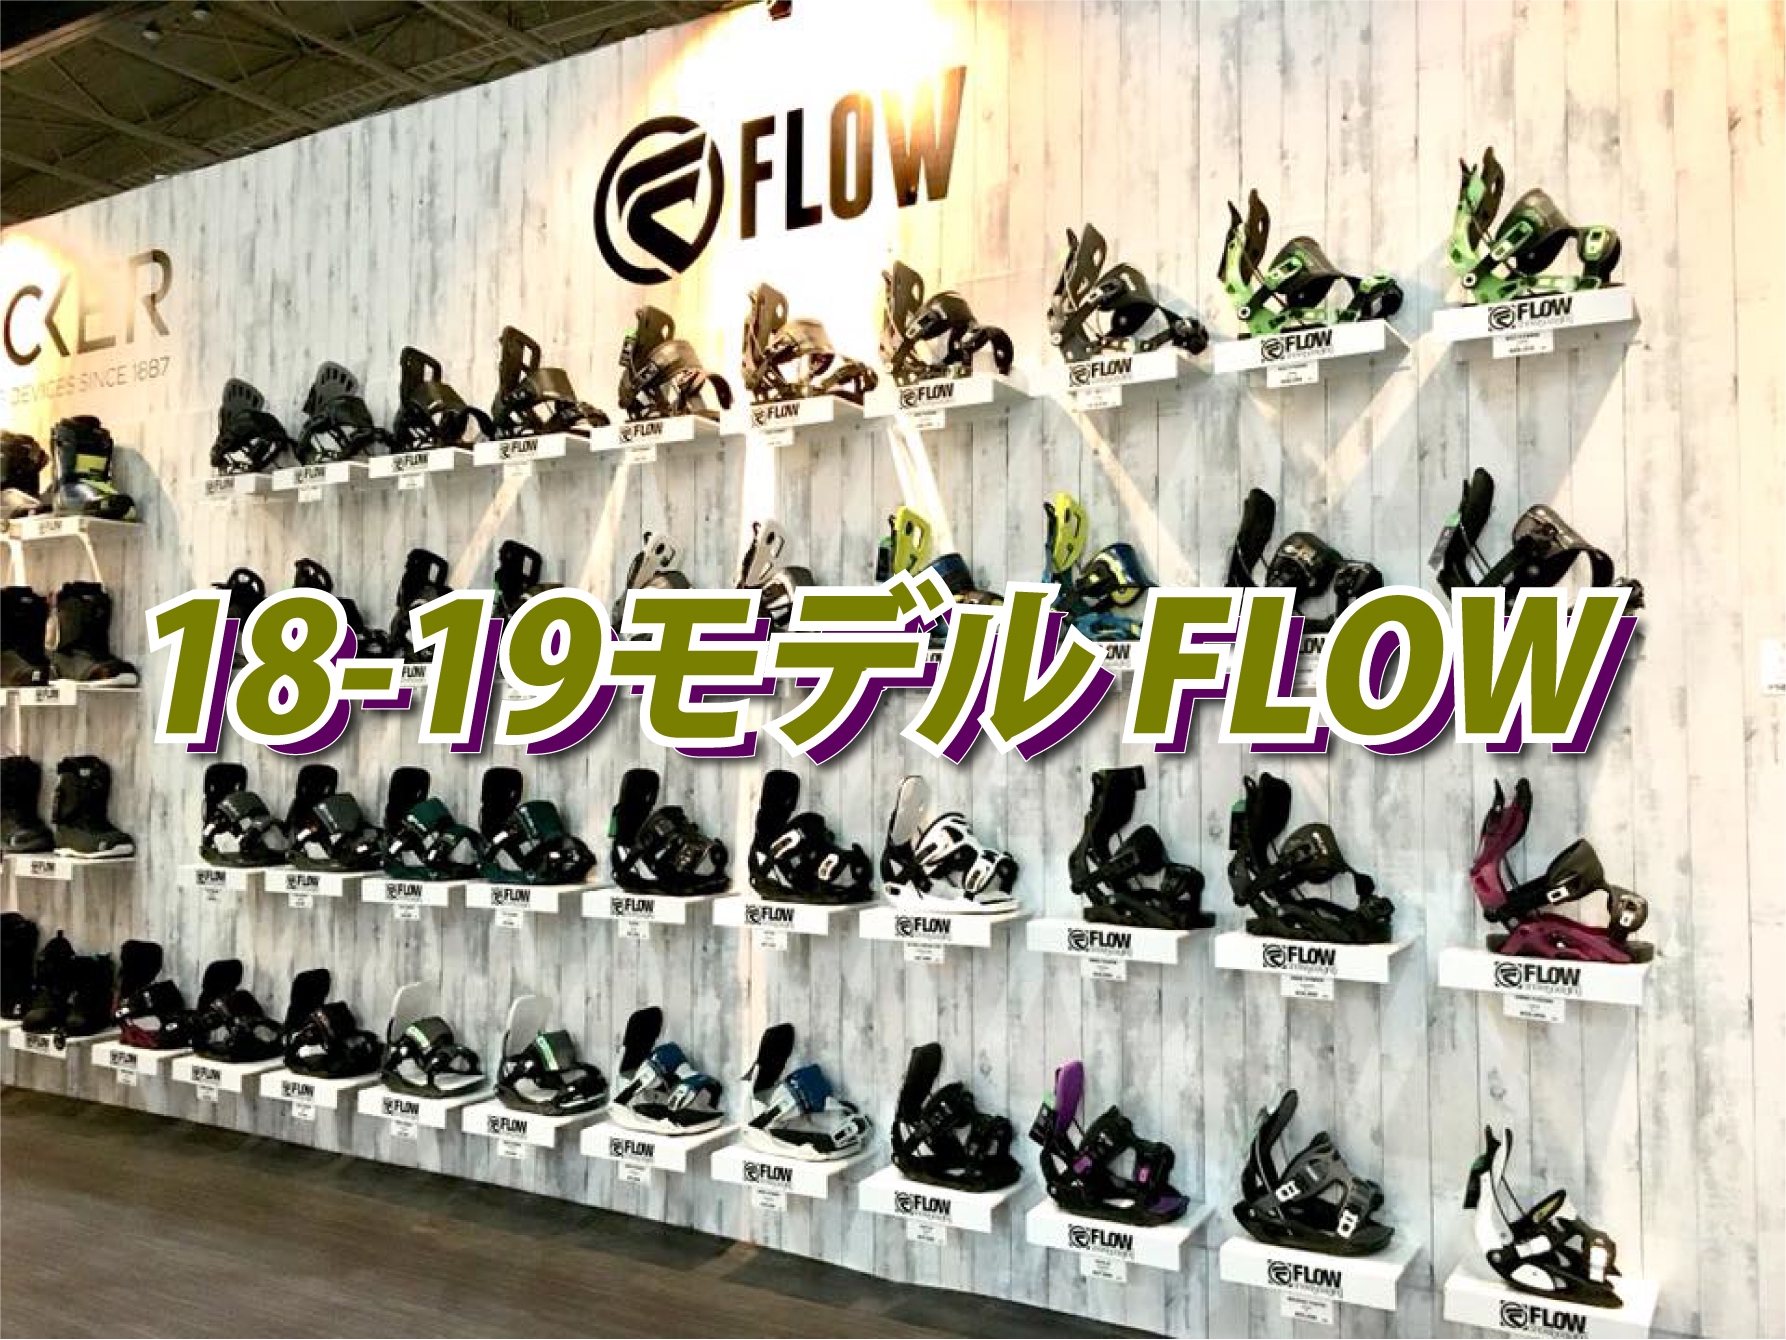 18-19 NEWモデル FLOW バインディング | 【b's east】